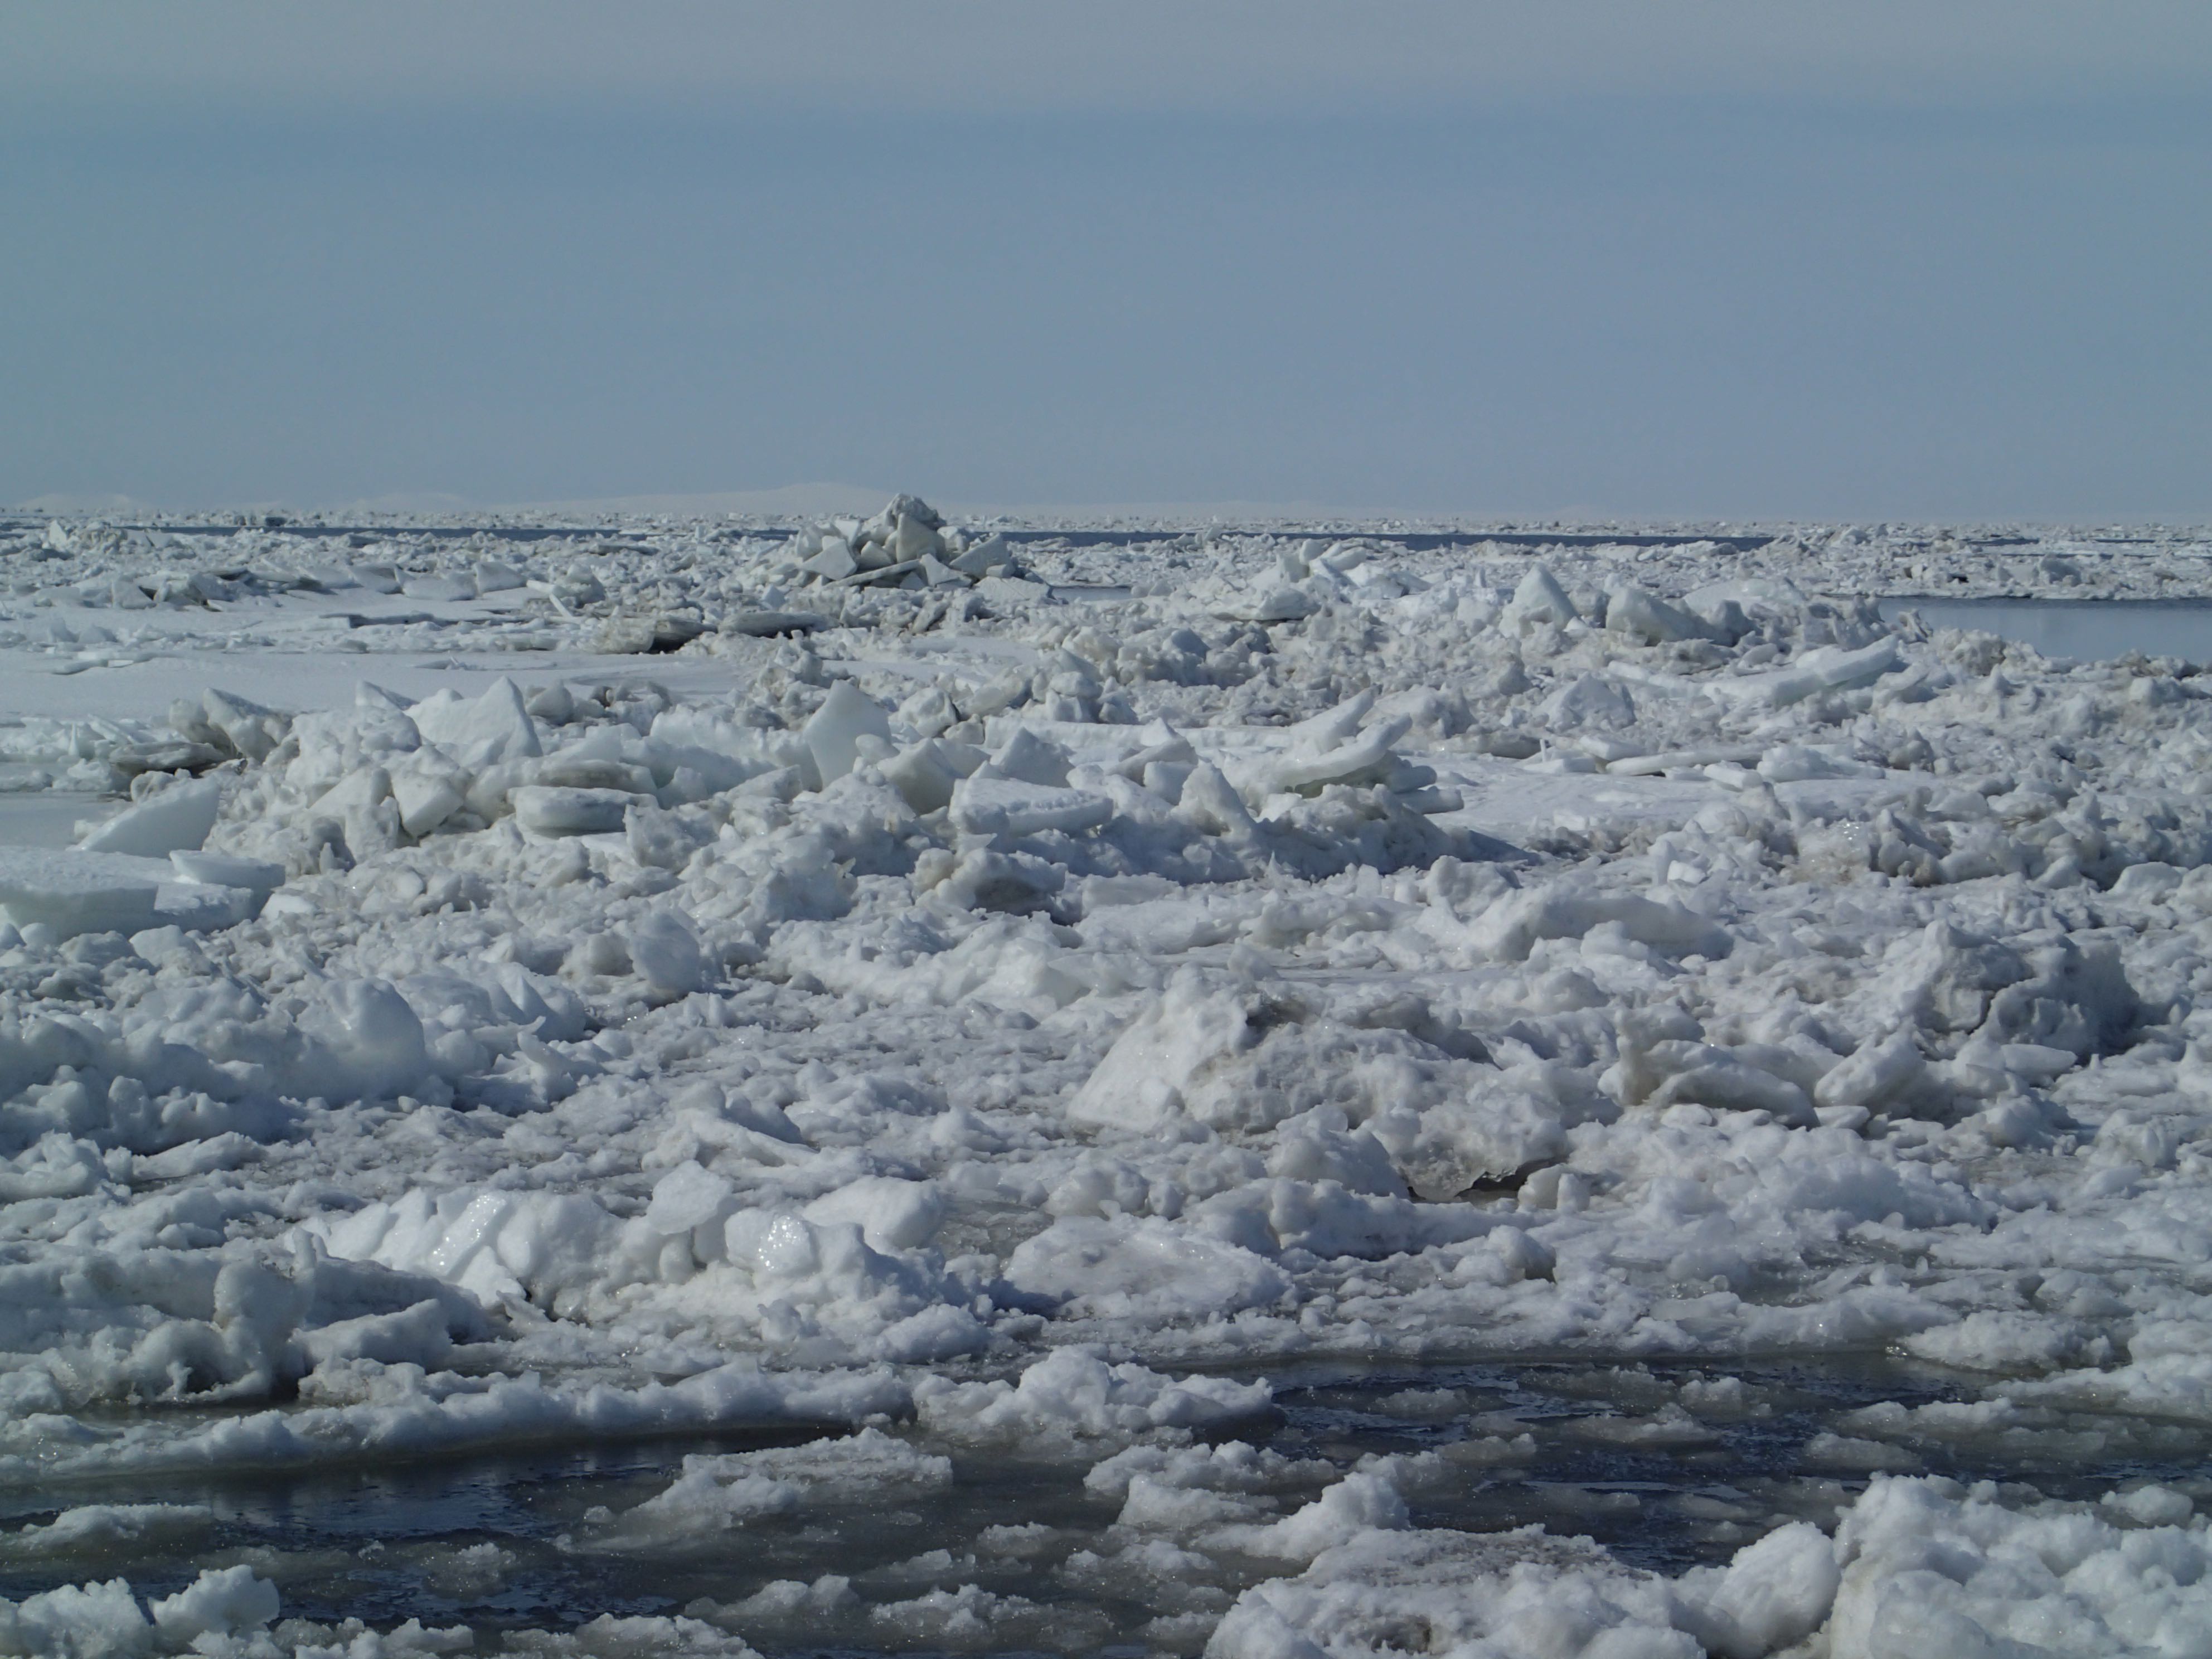 Bering Sea ice